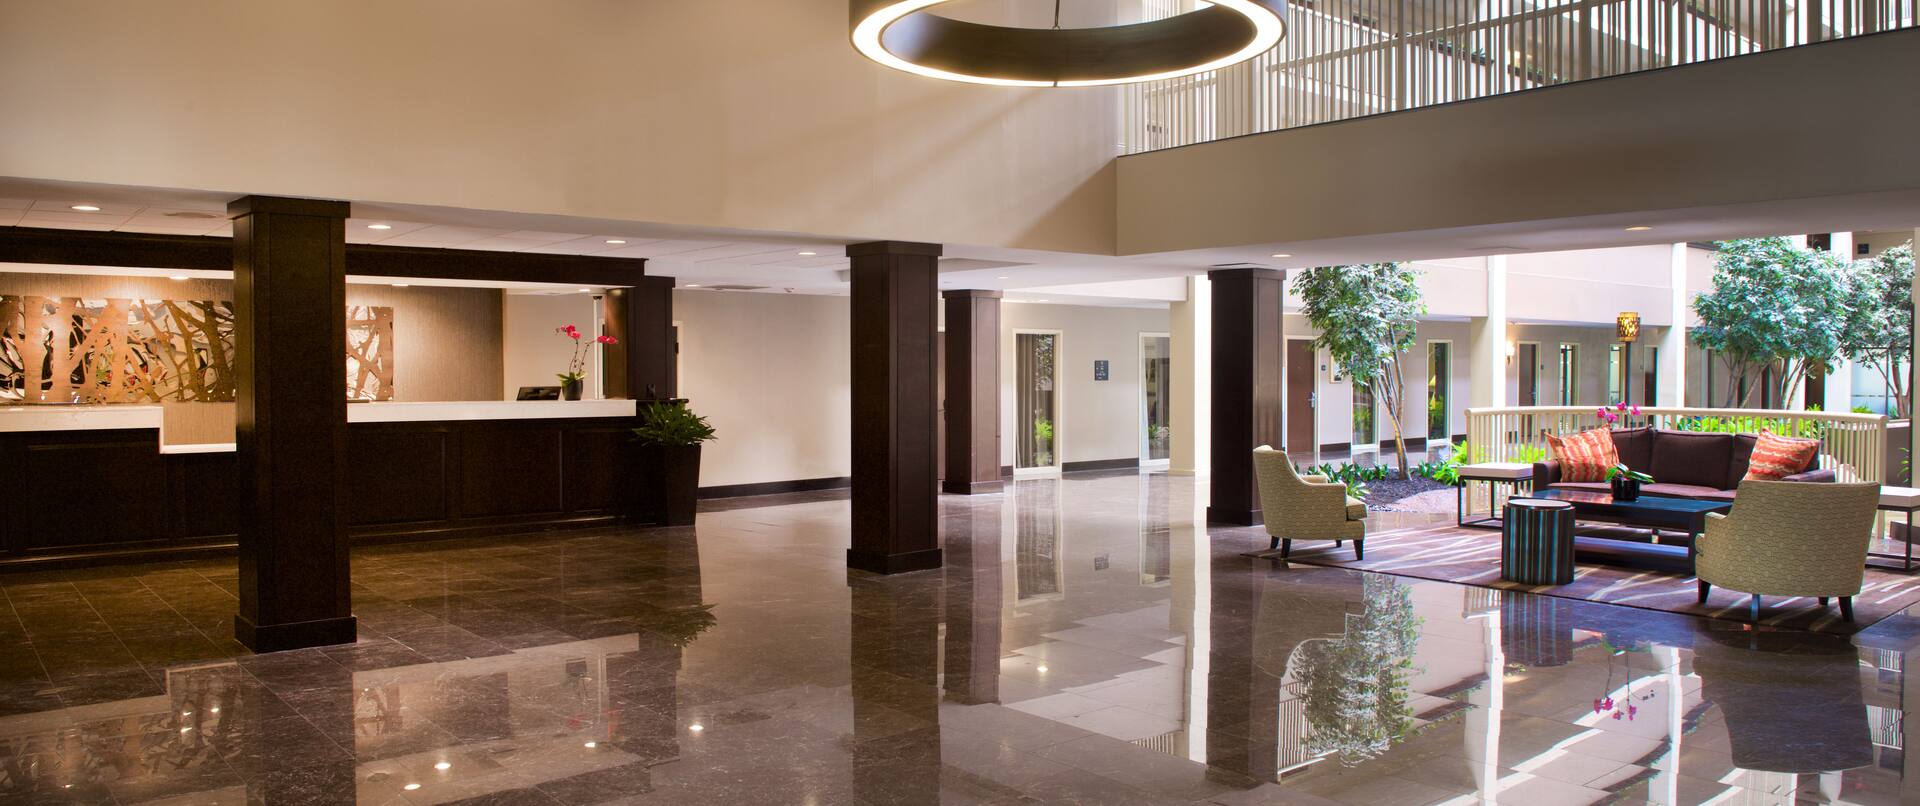 Lobby-Bereich des Hotels